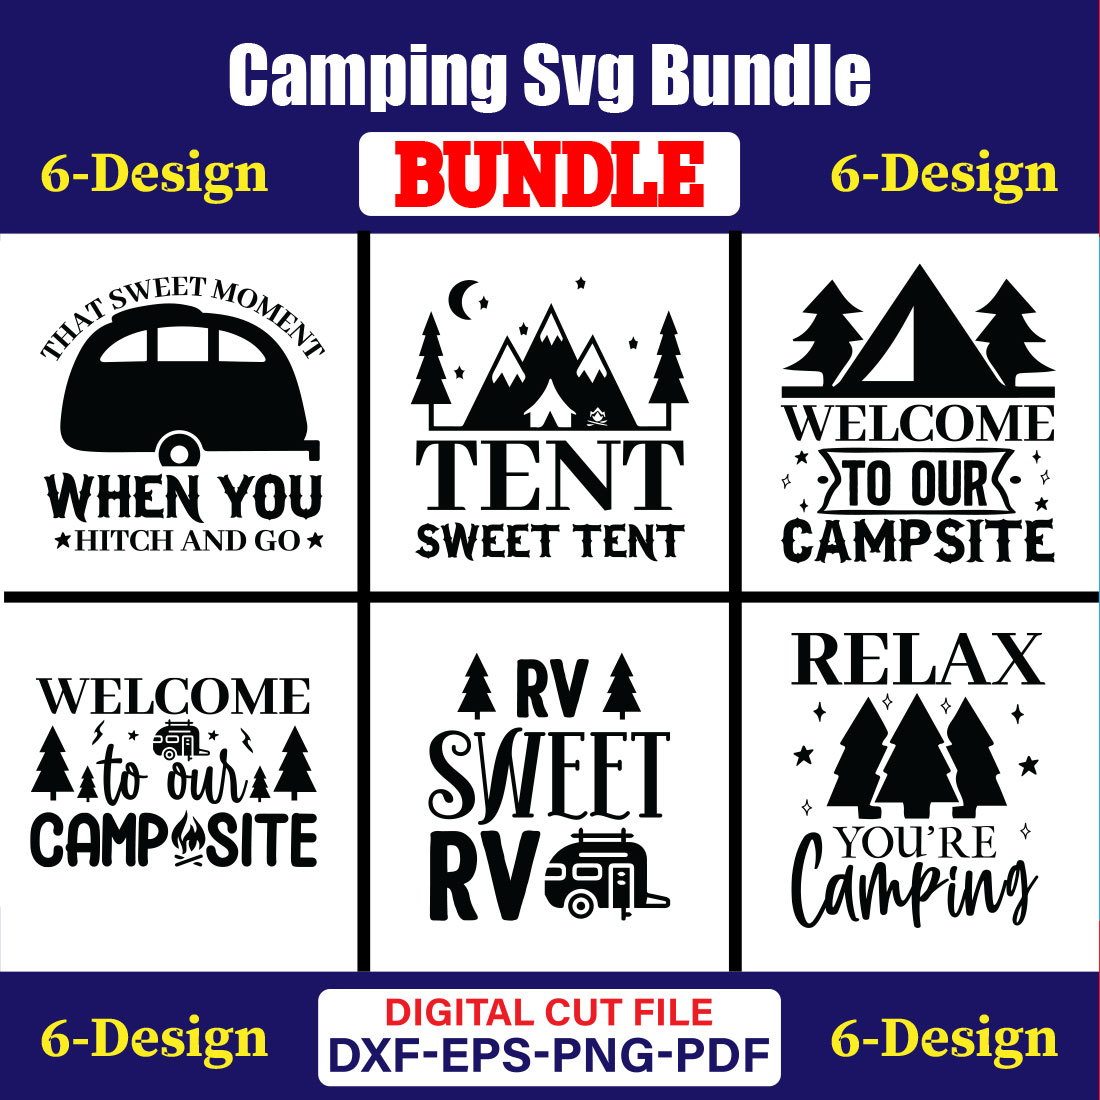 Camping T-shirt Design Bundle Vol-4 cover image.